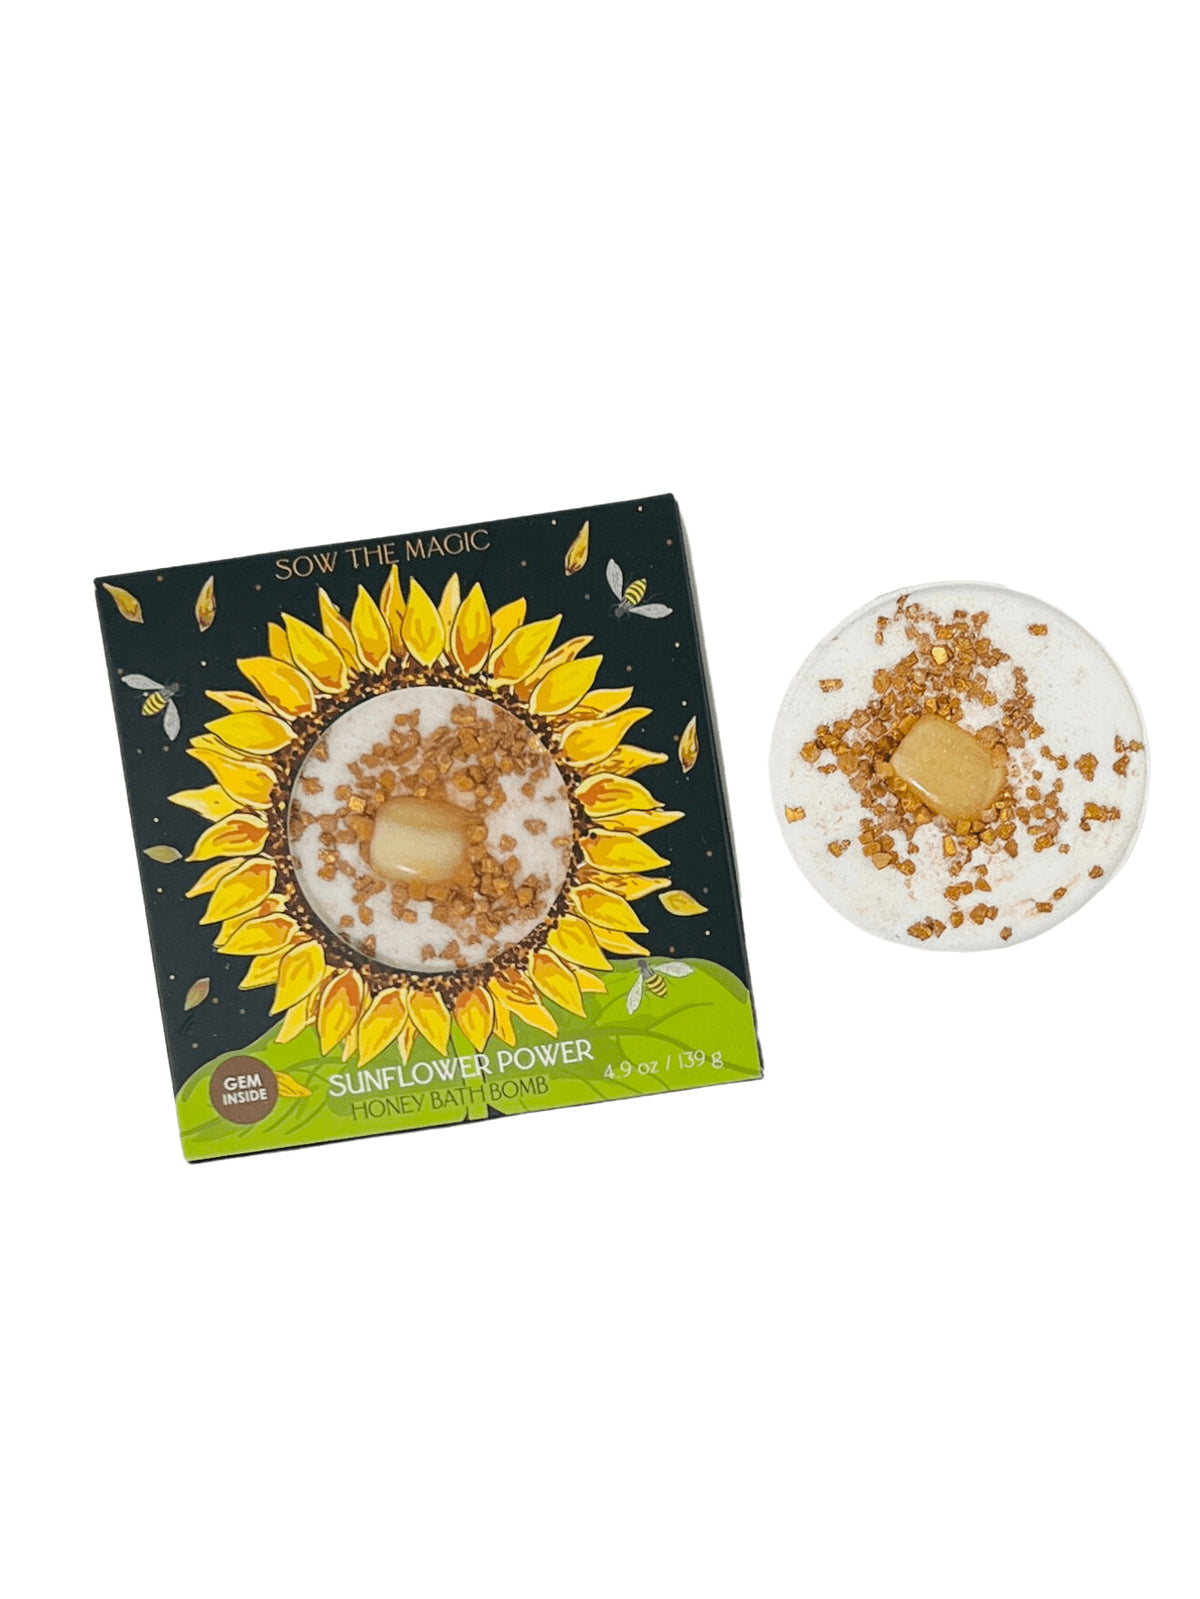 Sunflower Power Honey Bath Bomb with Amber